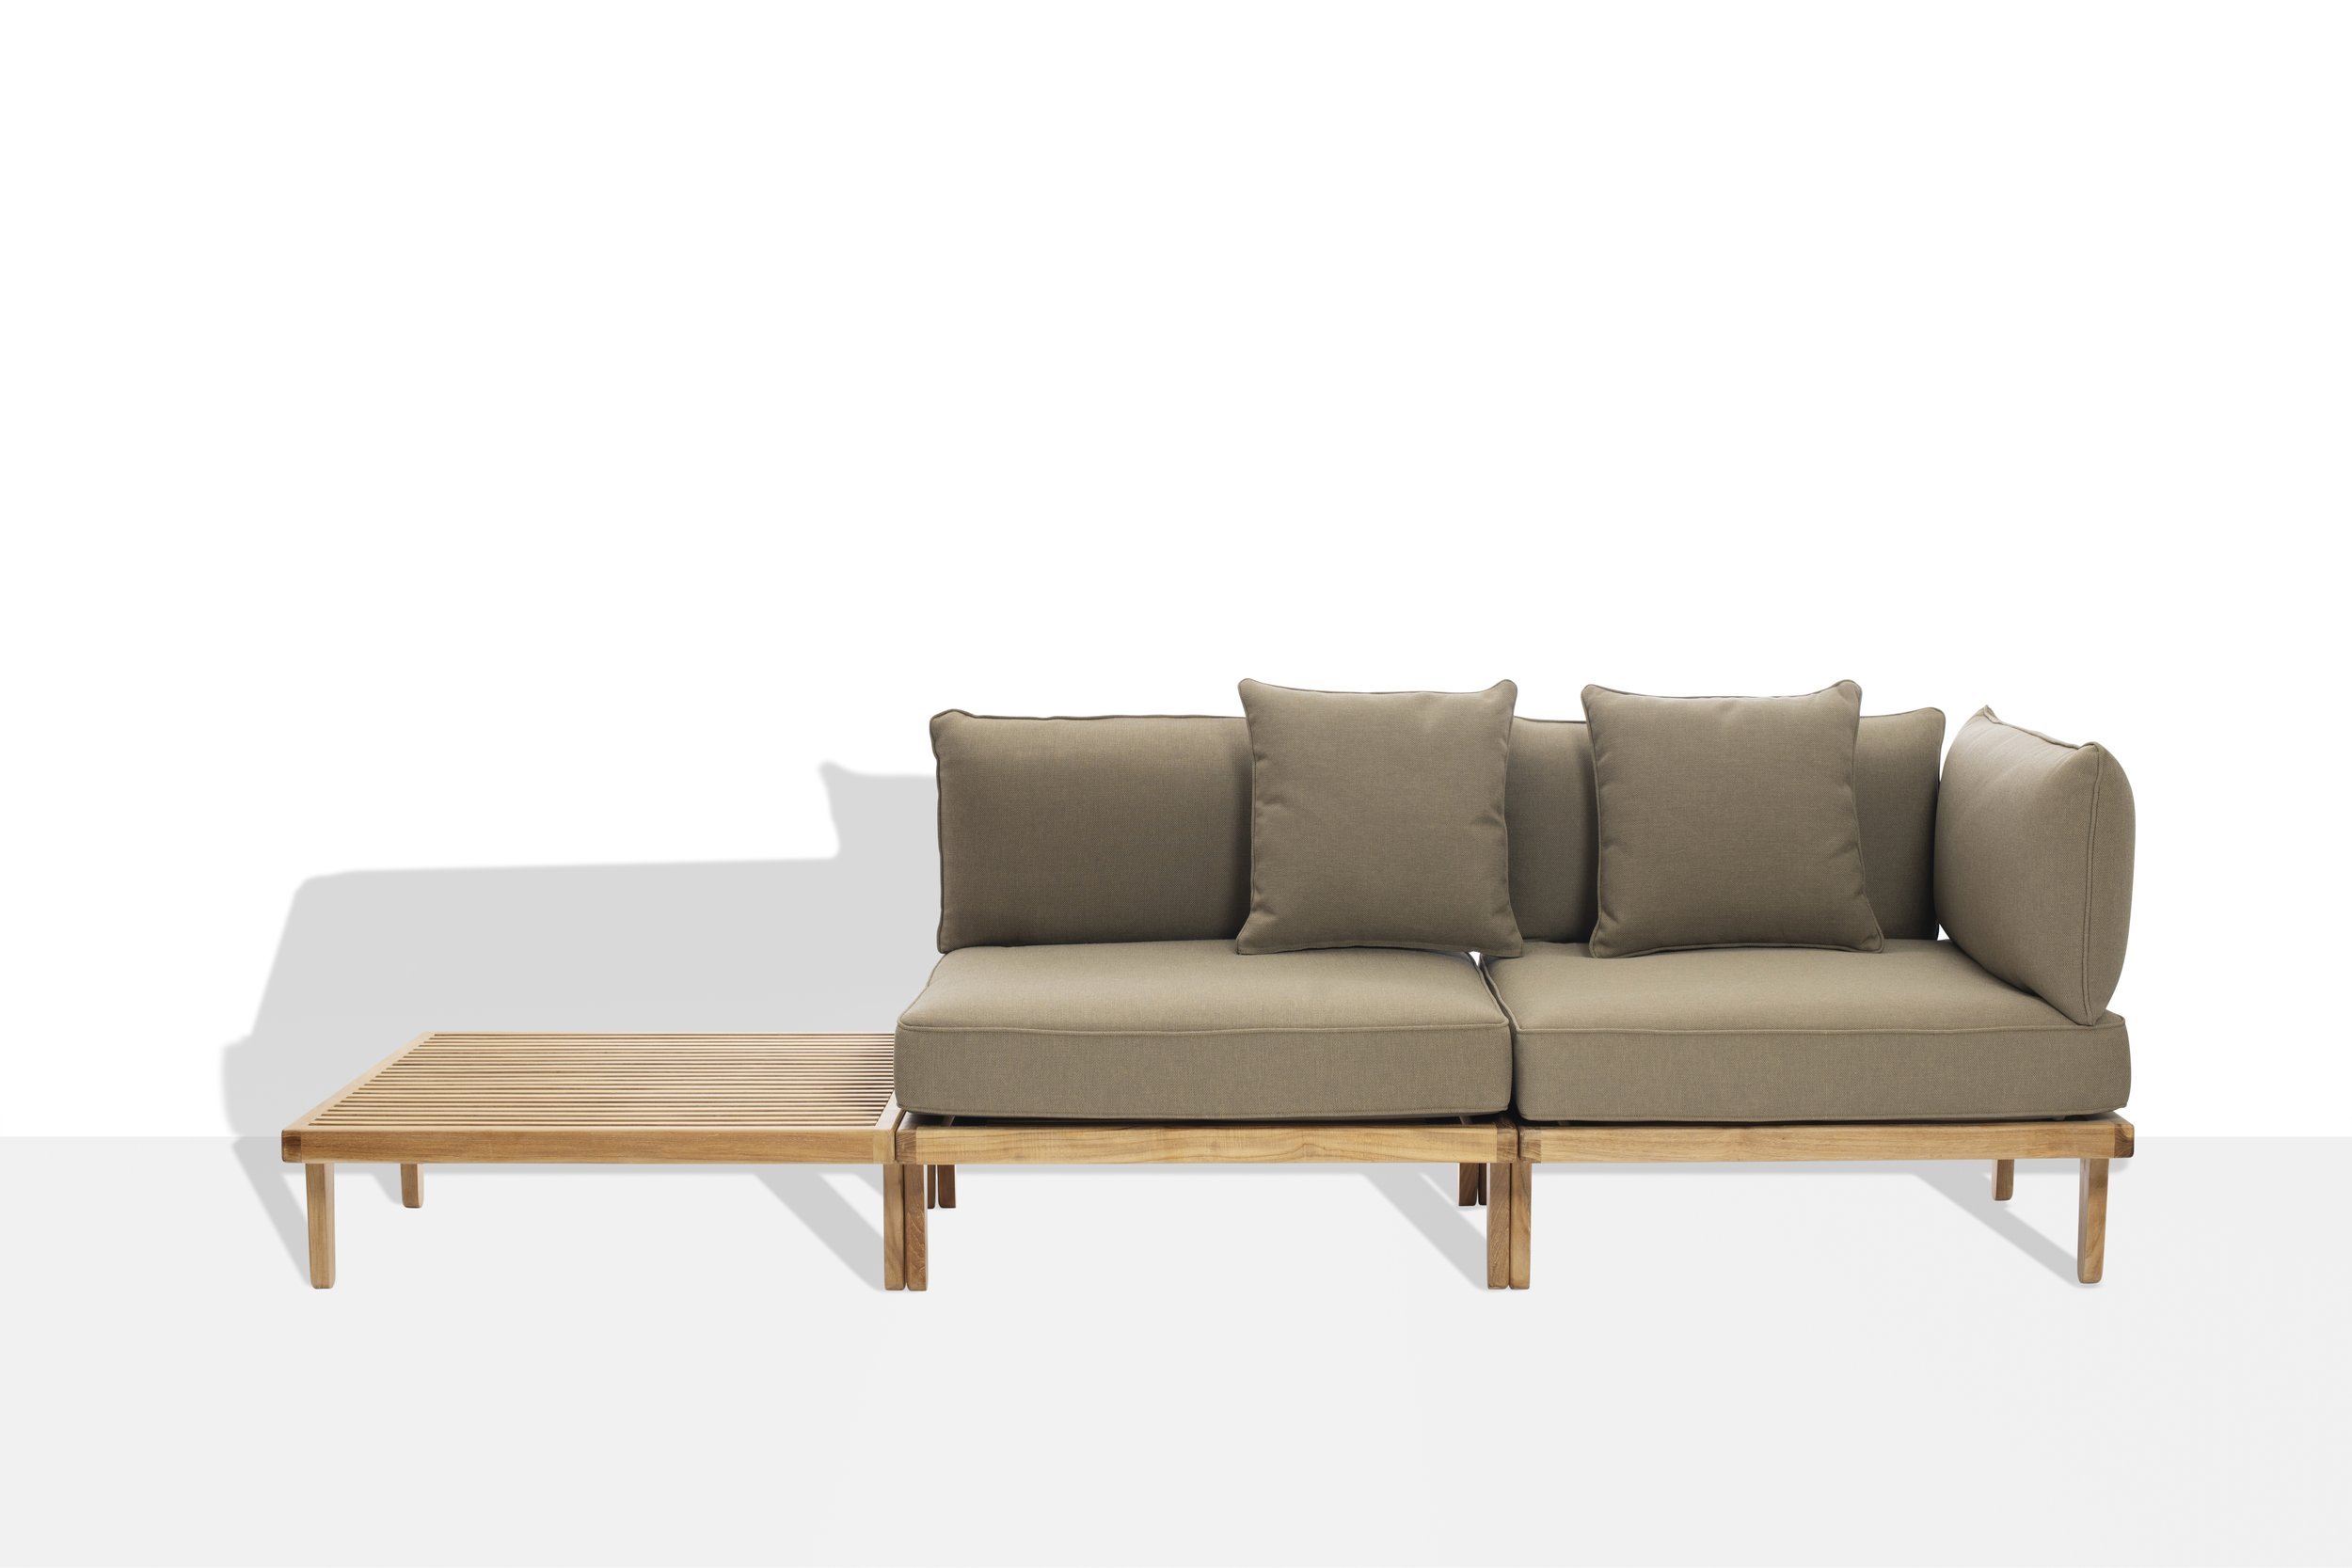 Sibast_outdoor_RIB_sofa_modular_system_with_sand_cushions_2.jpeg